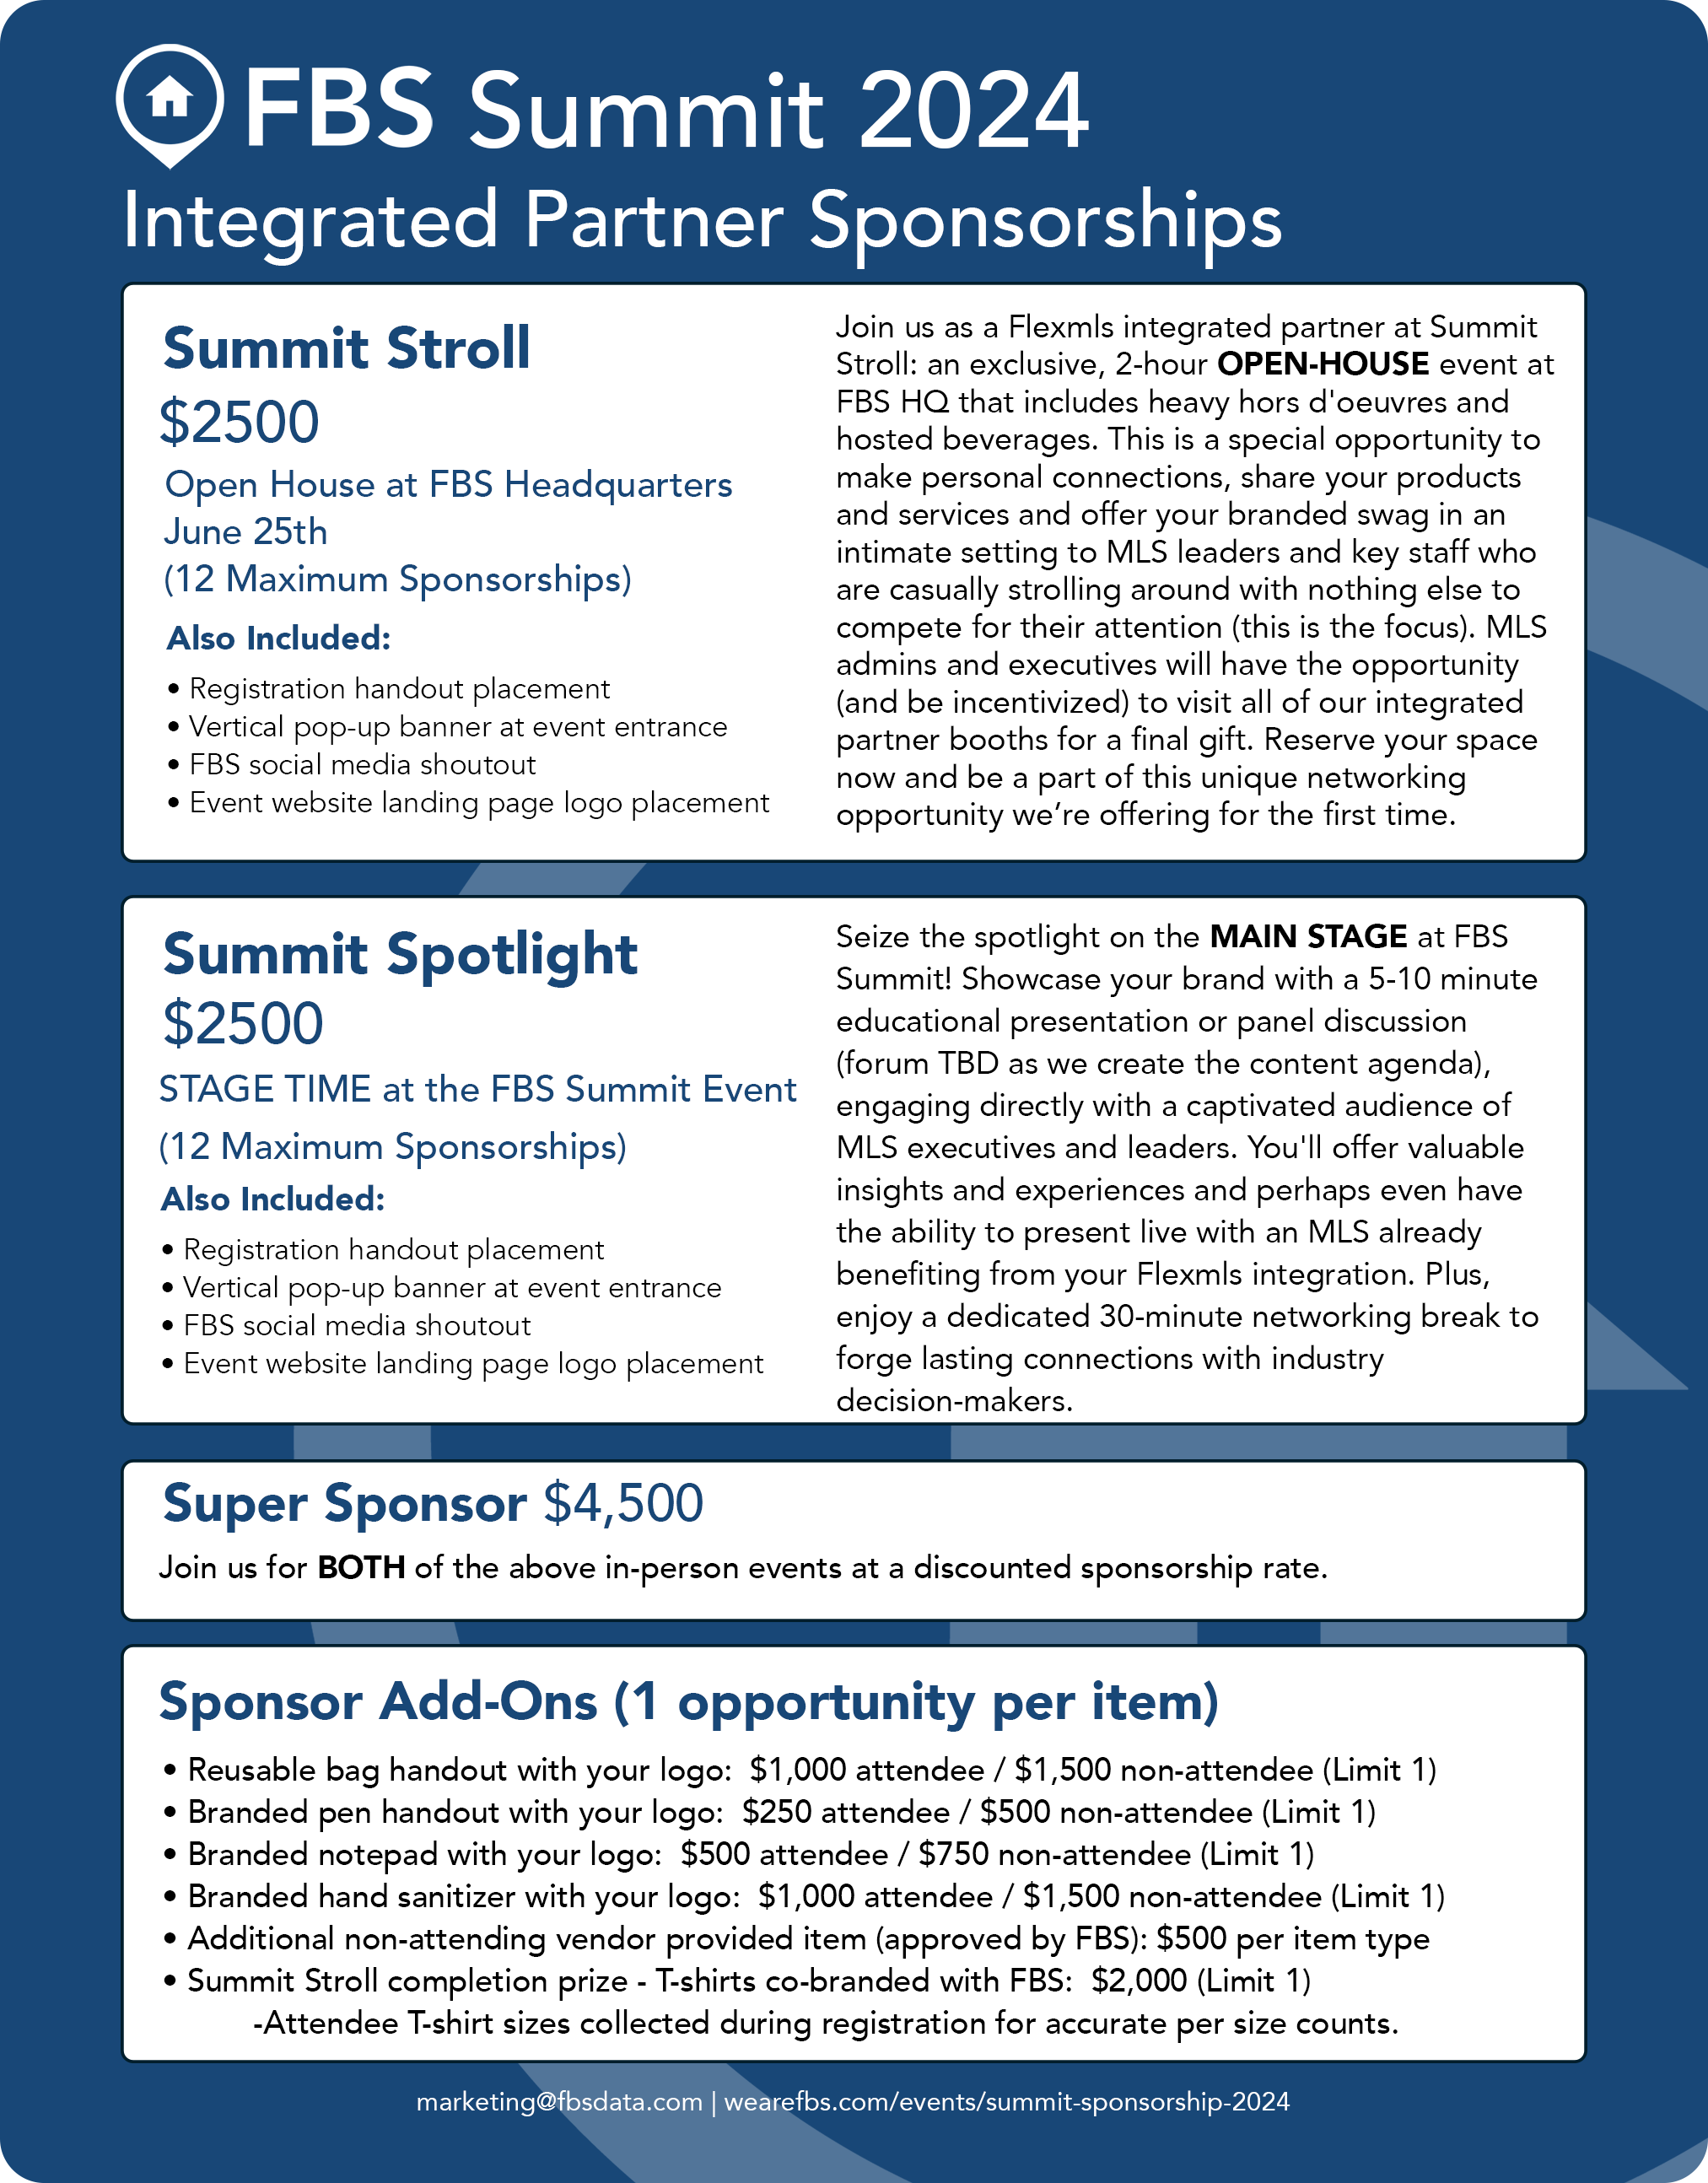 FBS Summit 2024 Sponsor Level Options Handout